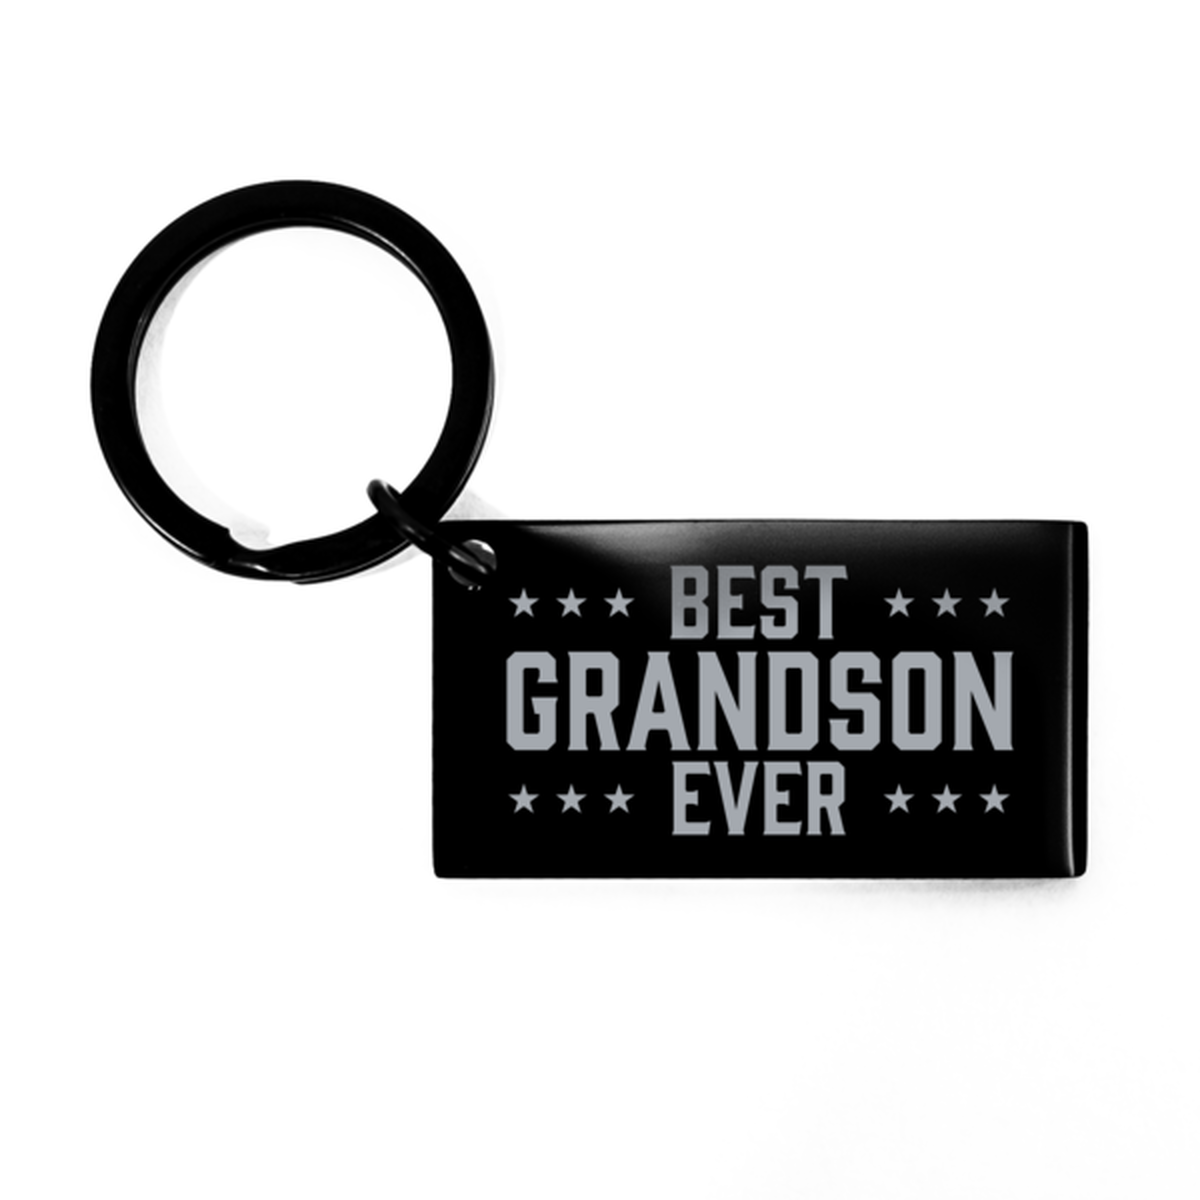 Best Grandson Ever Grandson Gifts, Funny Black Keychain For Grandson, Birthday Engraved Keyring Presents For Men